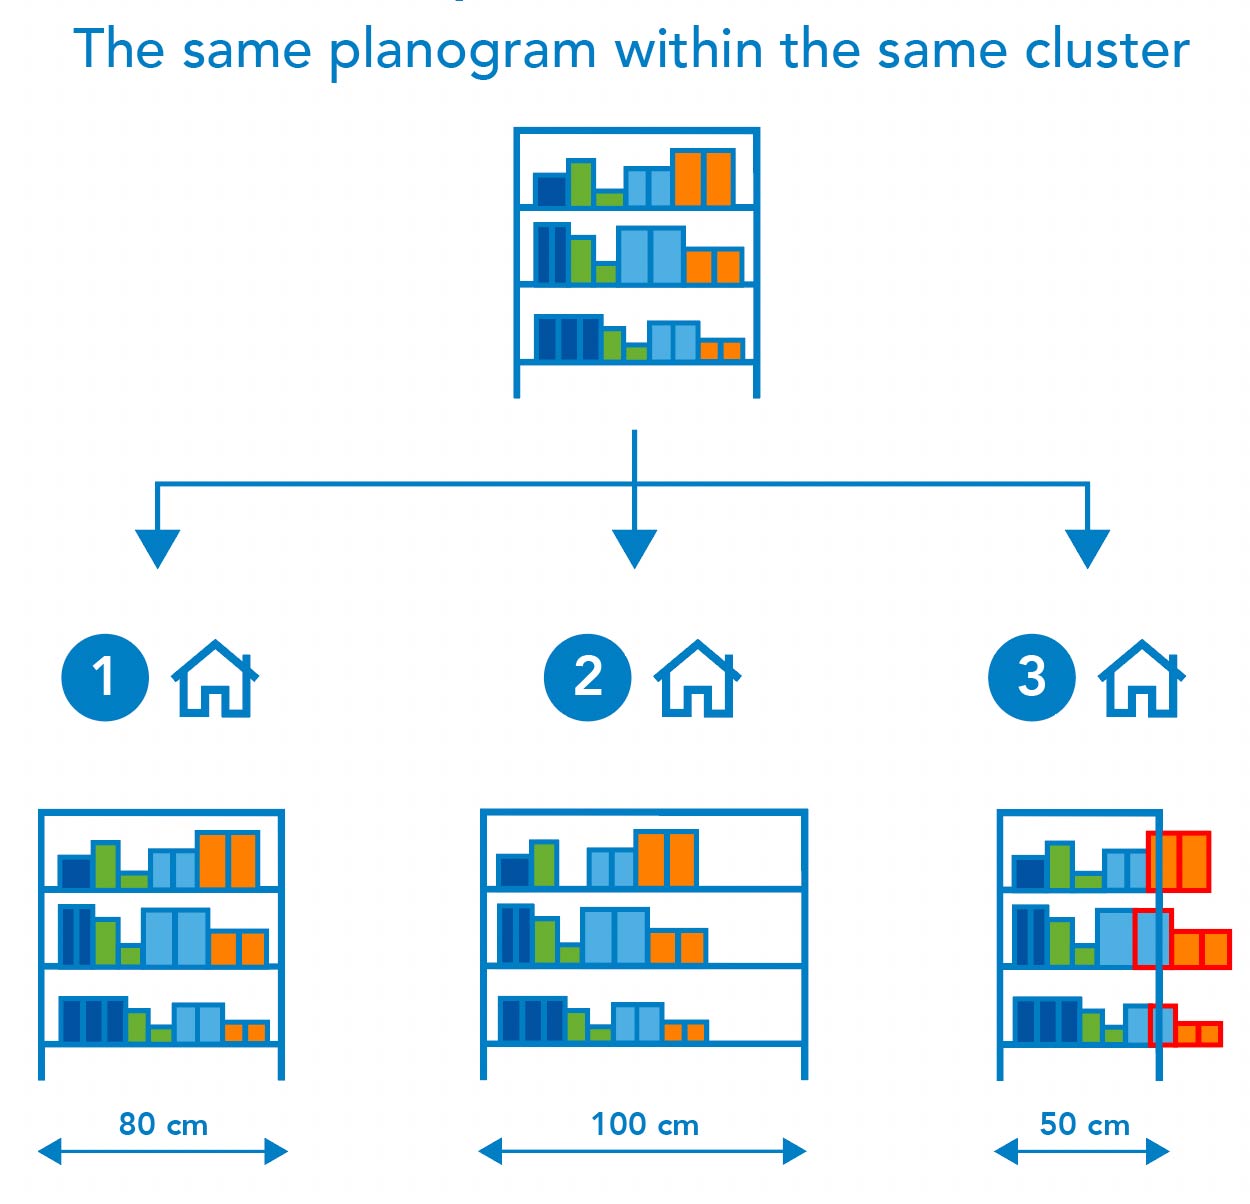 Cluster specific planograms